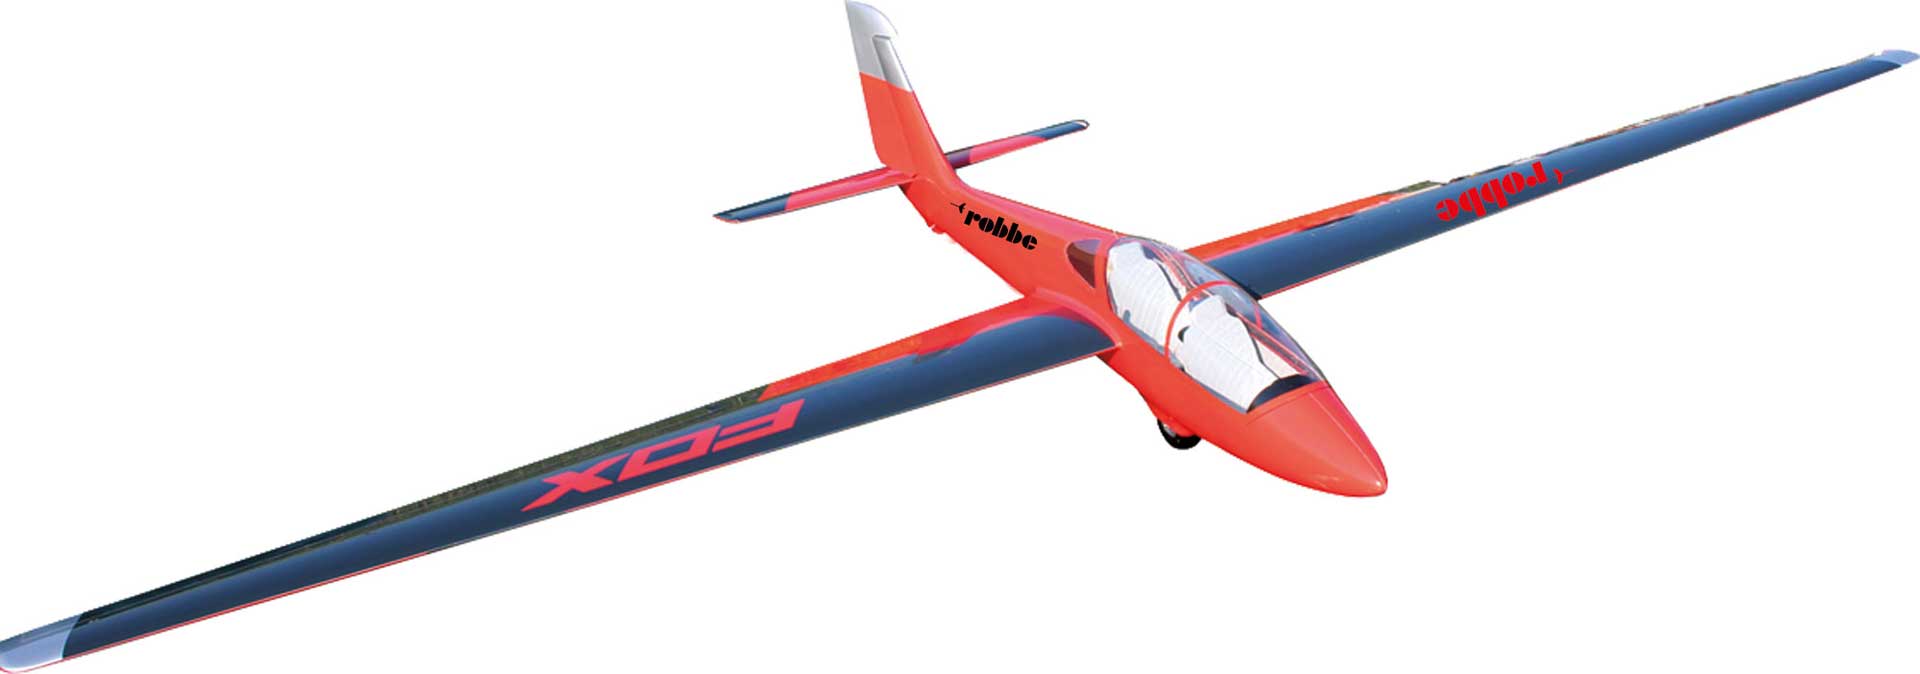 Robbe Modellsport MDM-1 Fox 3,5 m Segler ARF Voll GFK lackiert Kunstflug Segelflugzeug